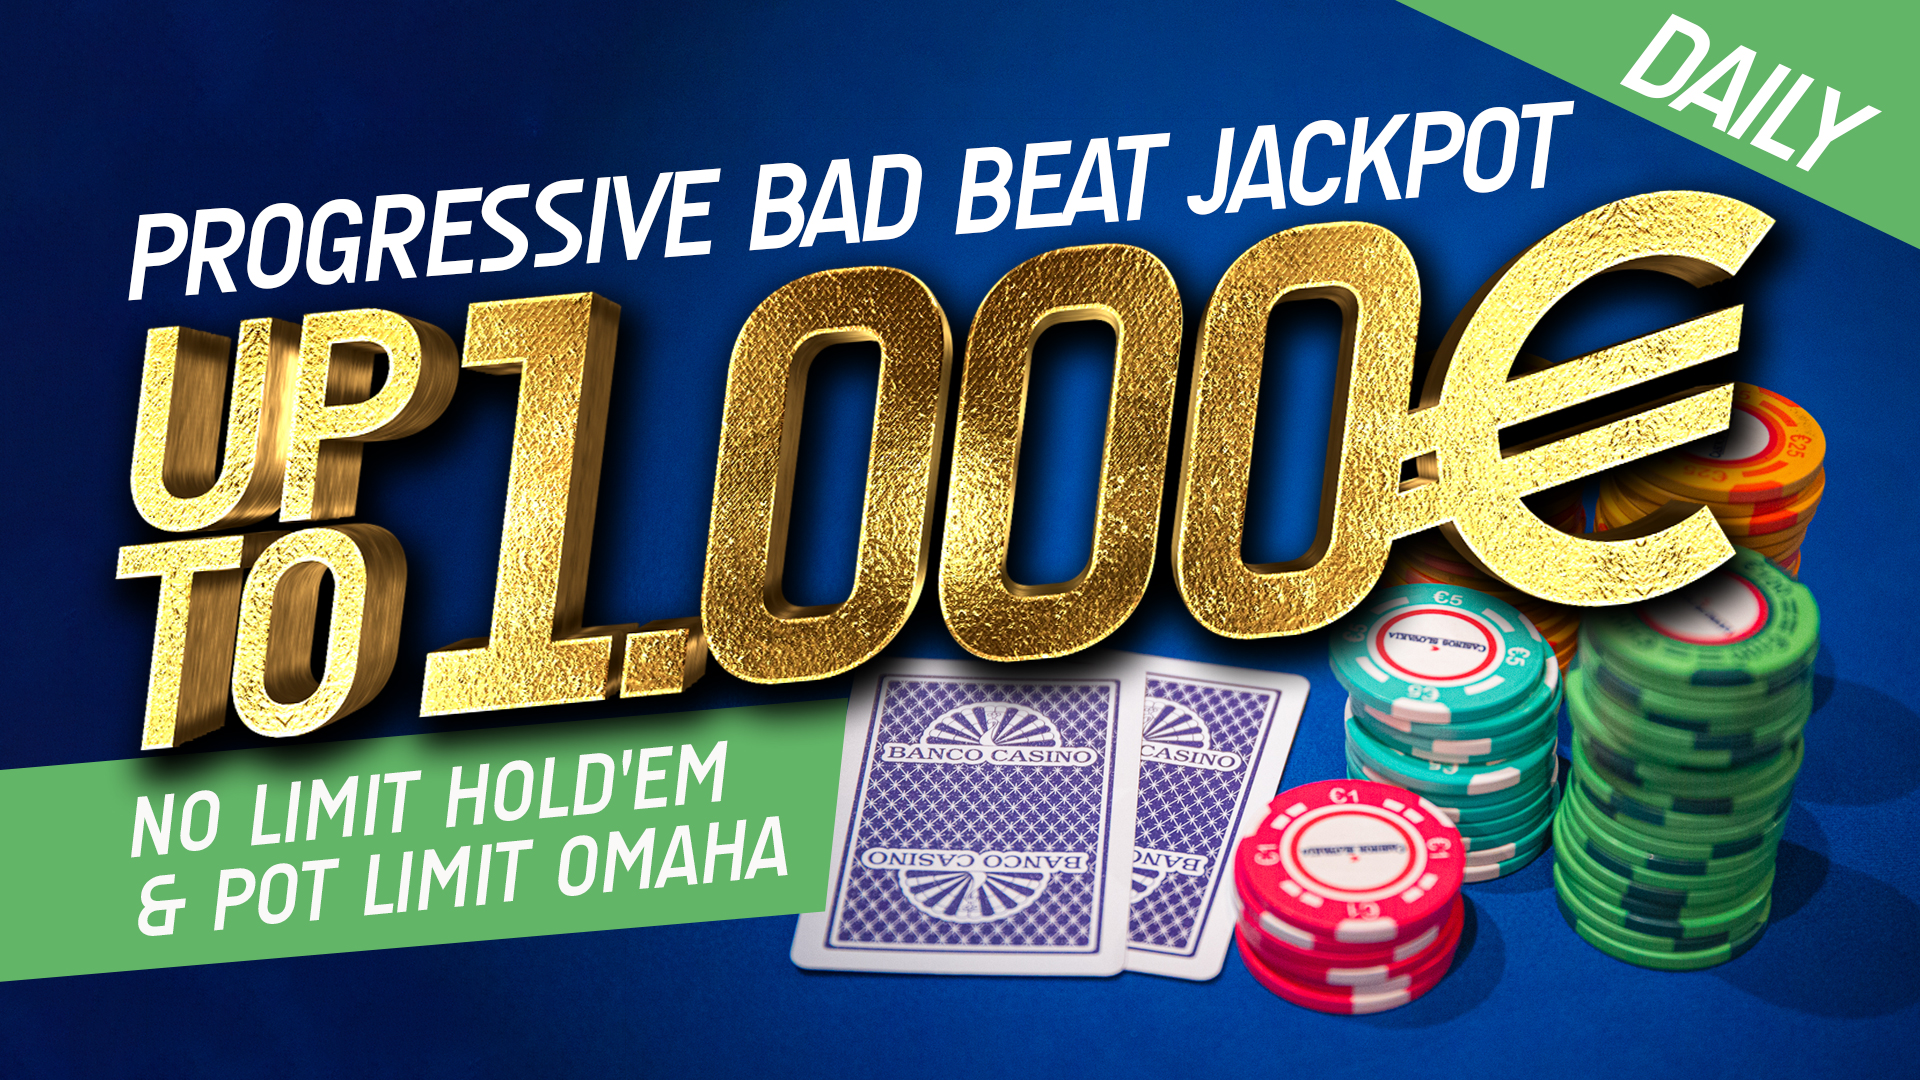 Progressive Bad Beat Jackpot - up to 1,000€ every day!